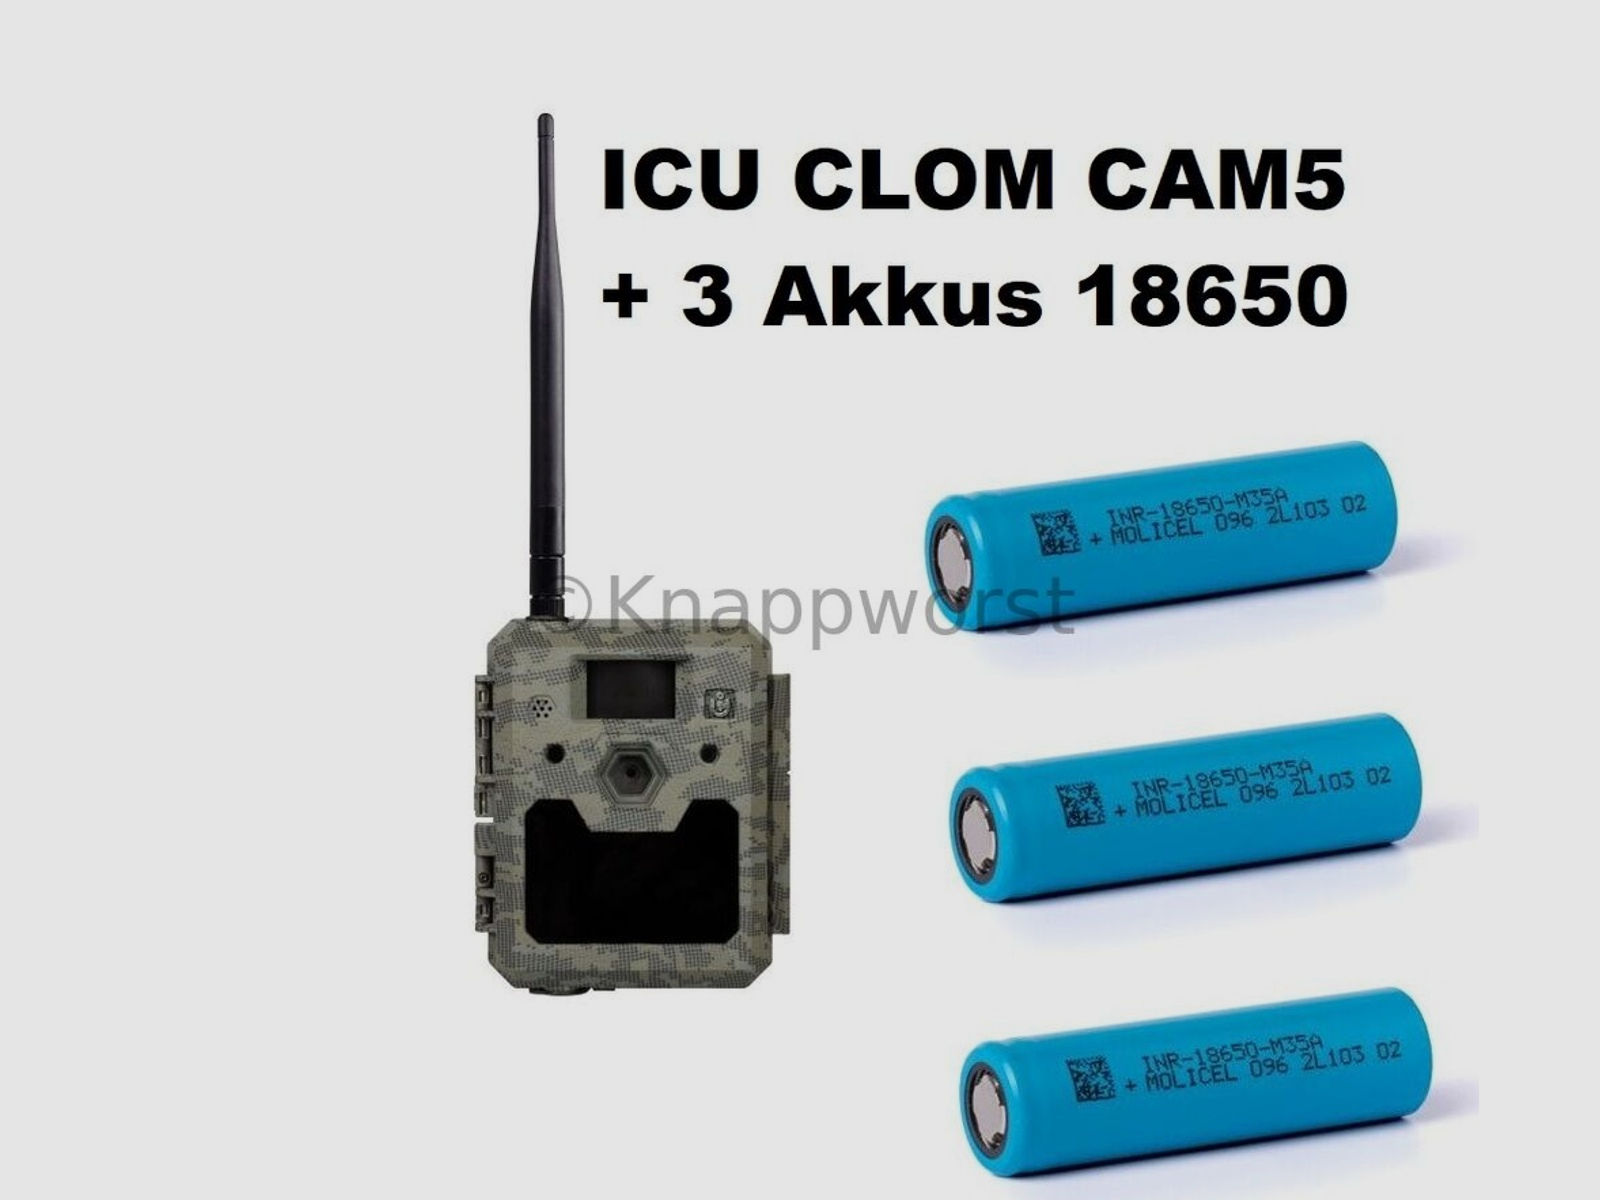 ICU	 CLOM CAM5 Wildkamera